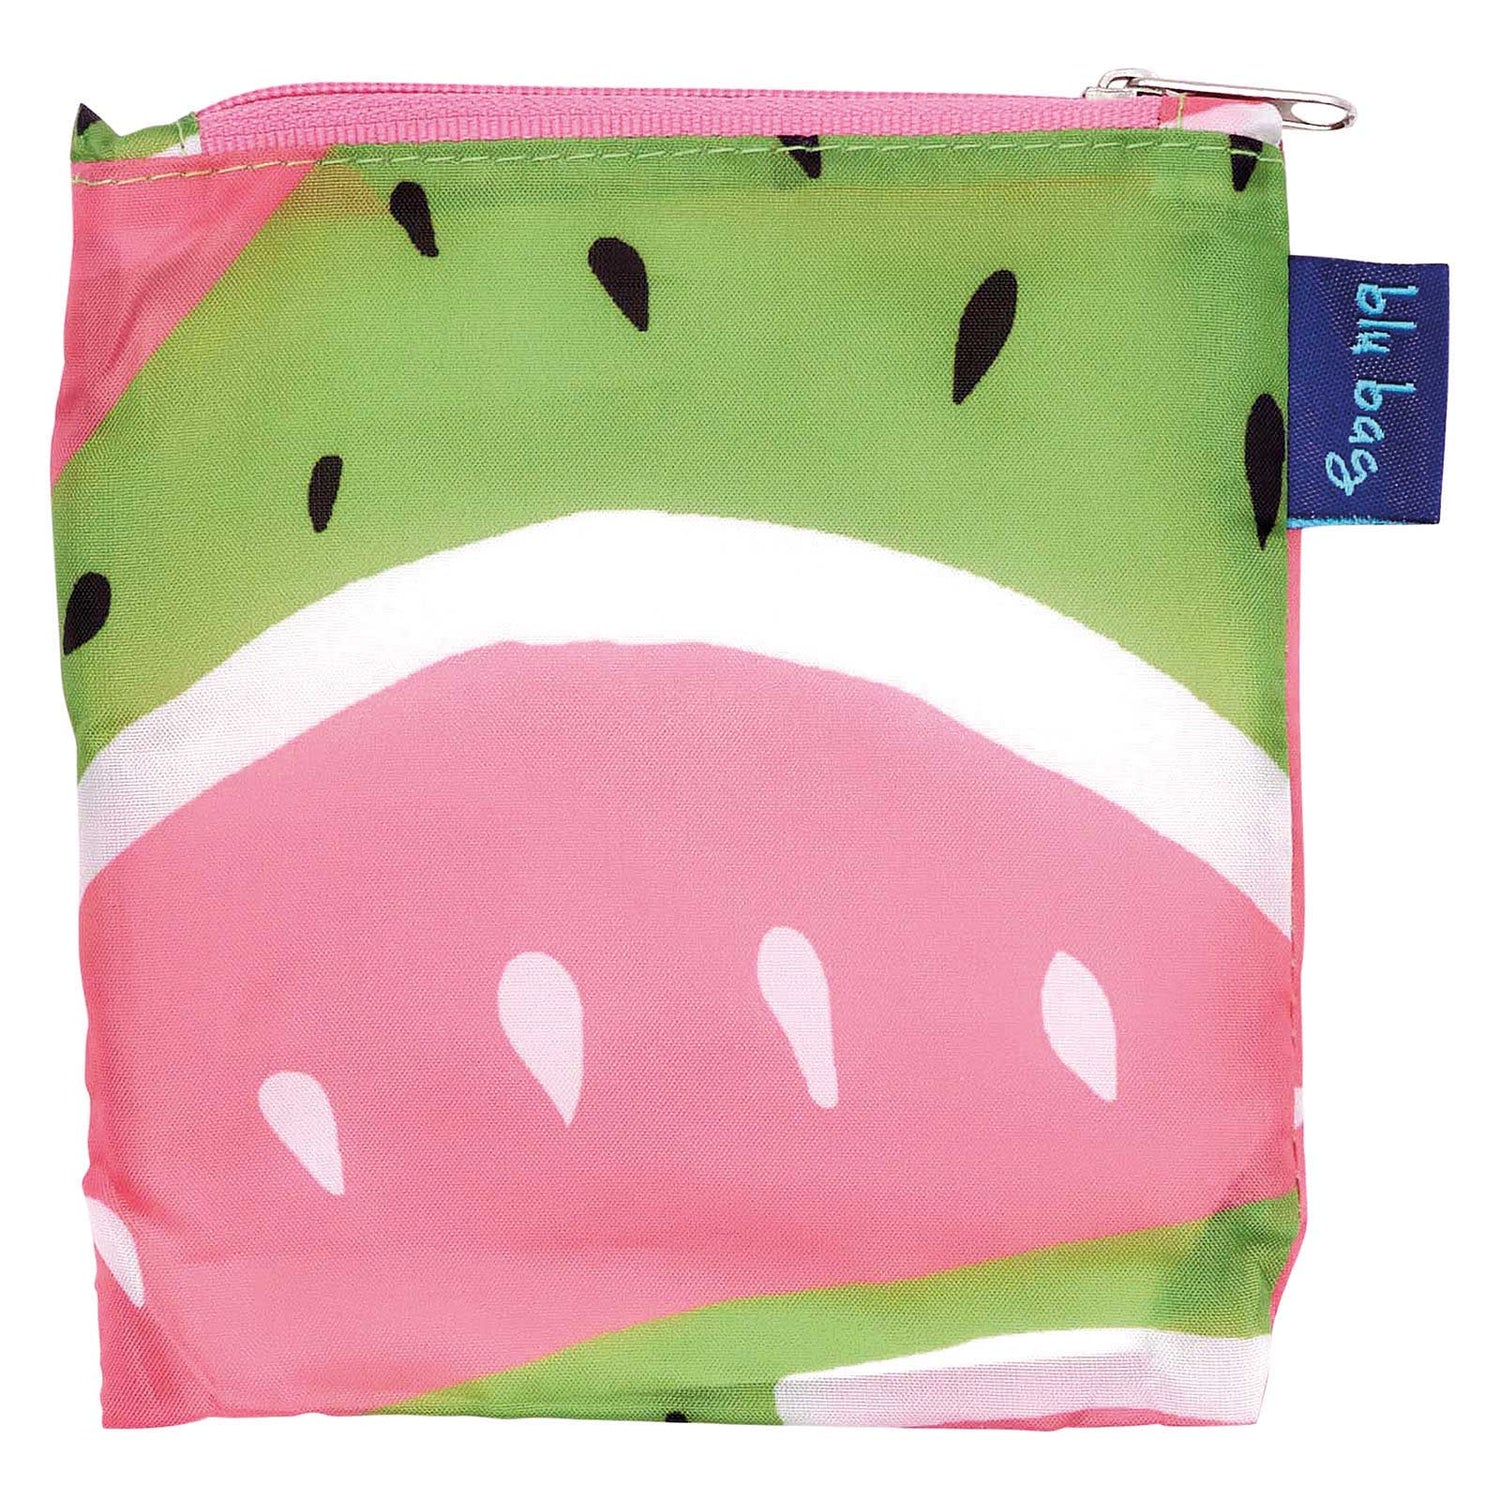 Watermelon Blu Bag Reusable Shopping Bag - Machine Washable Reusable Shopping Bag - rockflowerpaper